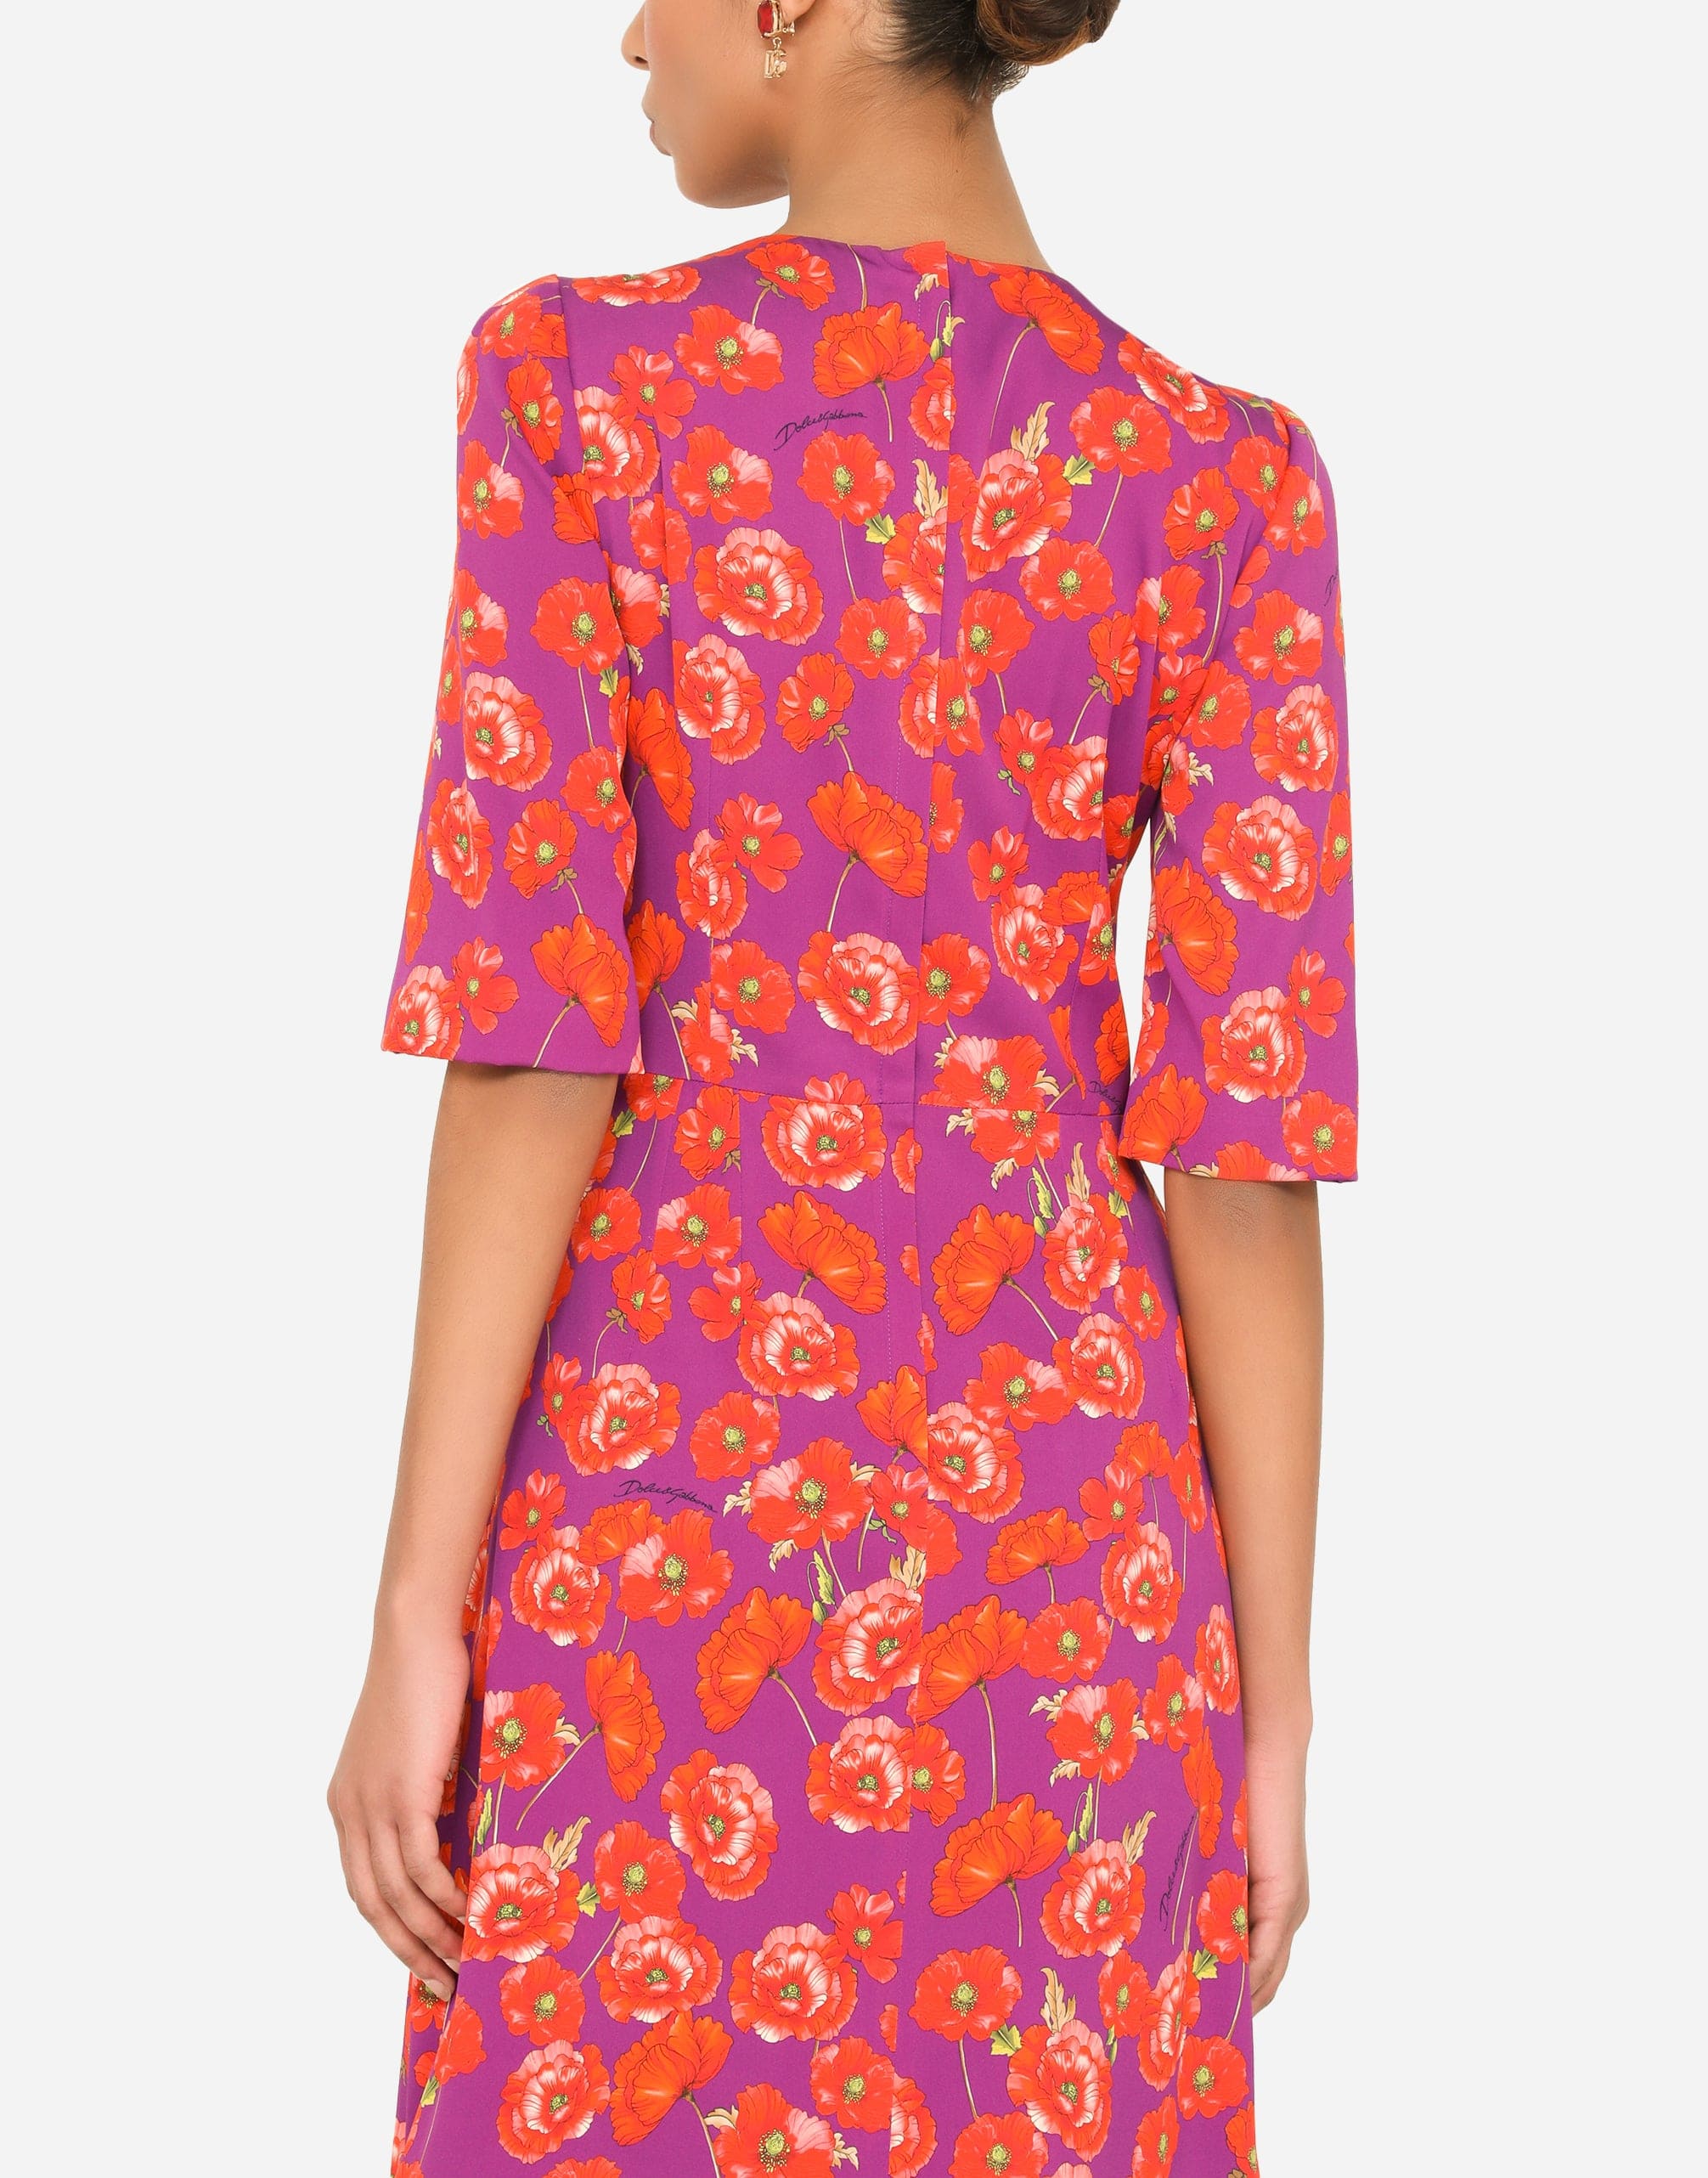 Dolce & Gabbana Poppy-Print Three-Quarter Sleeve Dress